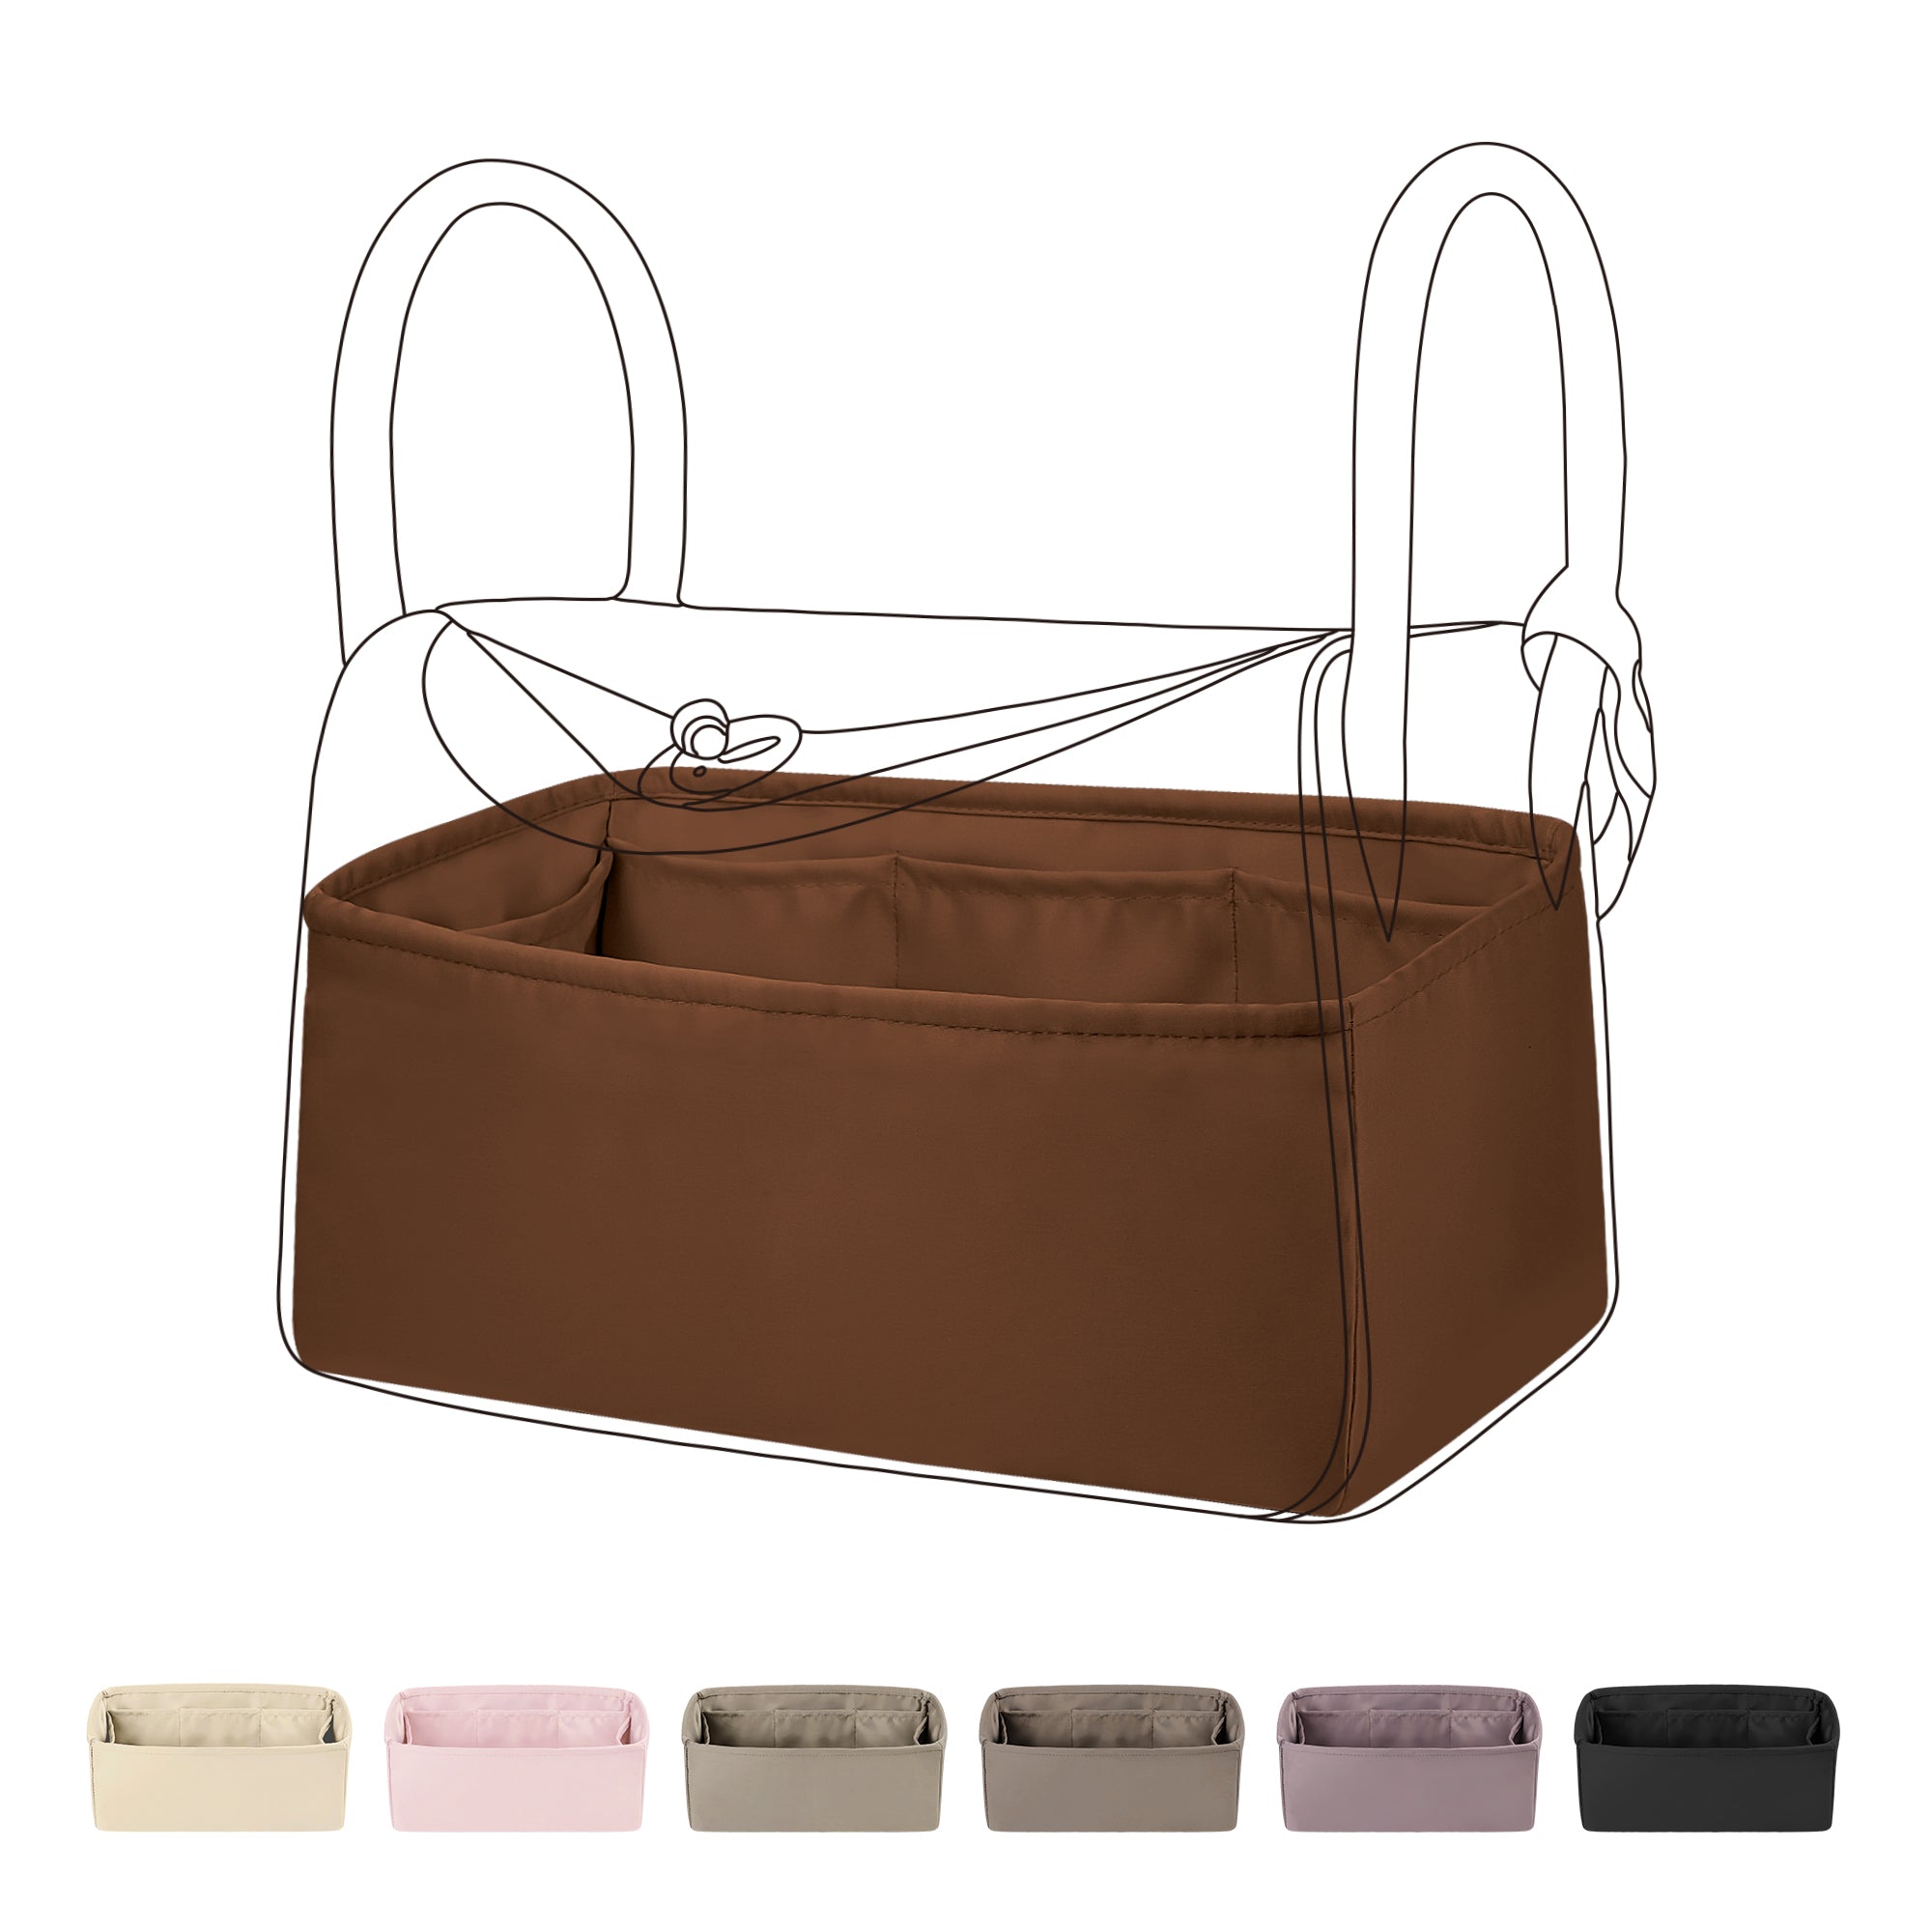 Bag Organizer for LV Keepall 50 Luggage - Premium Felt (Handmade/20 Colors)  : Handmade Products 